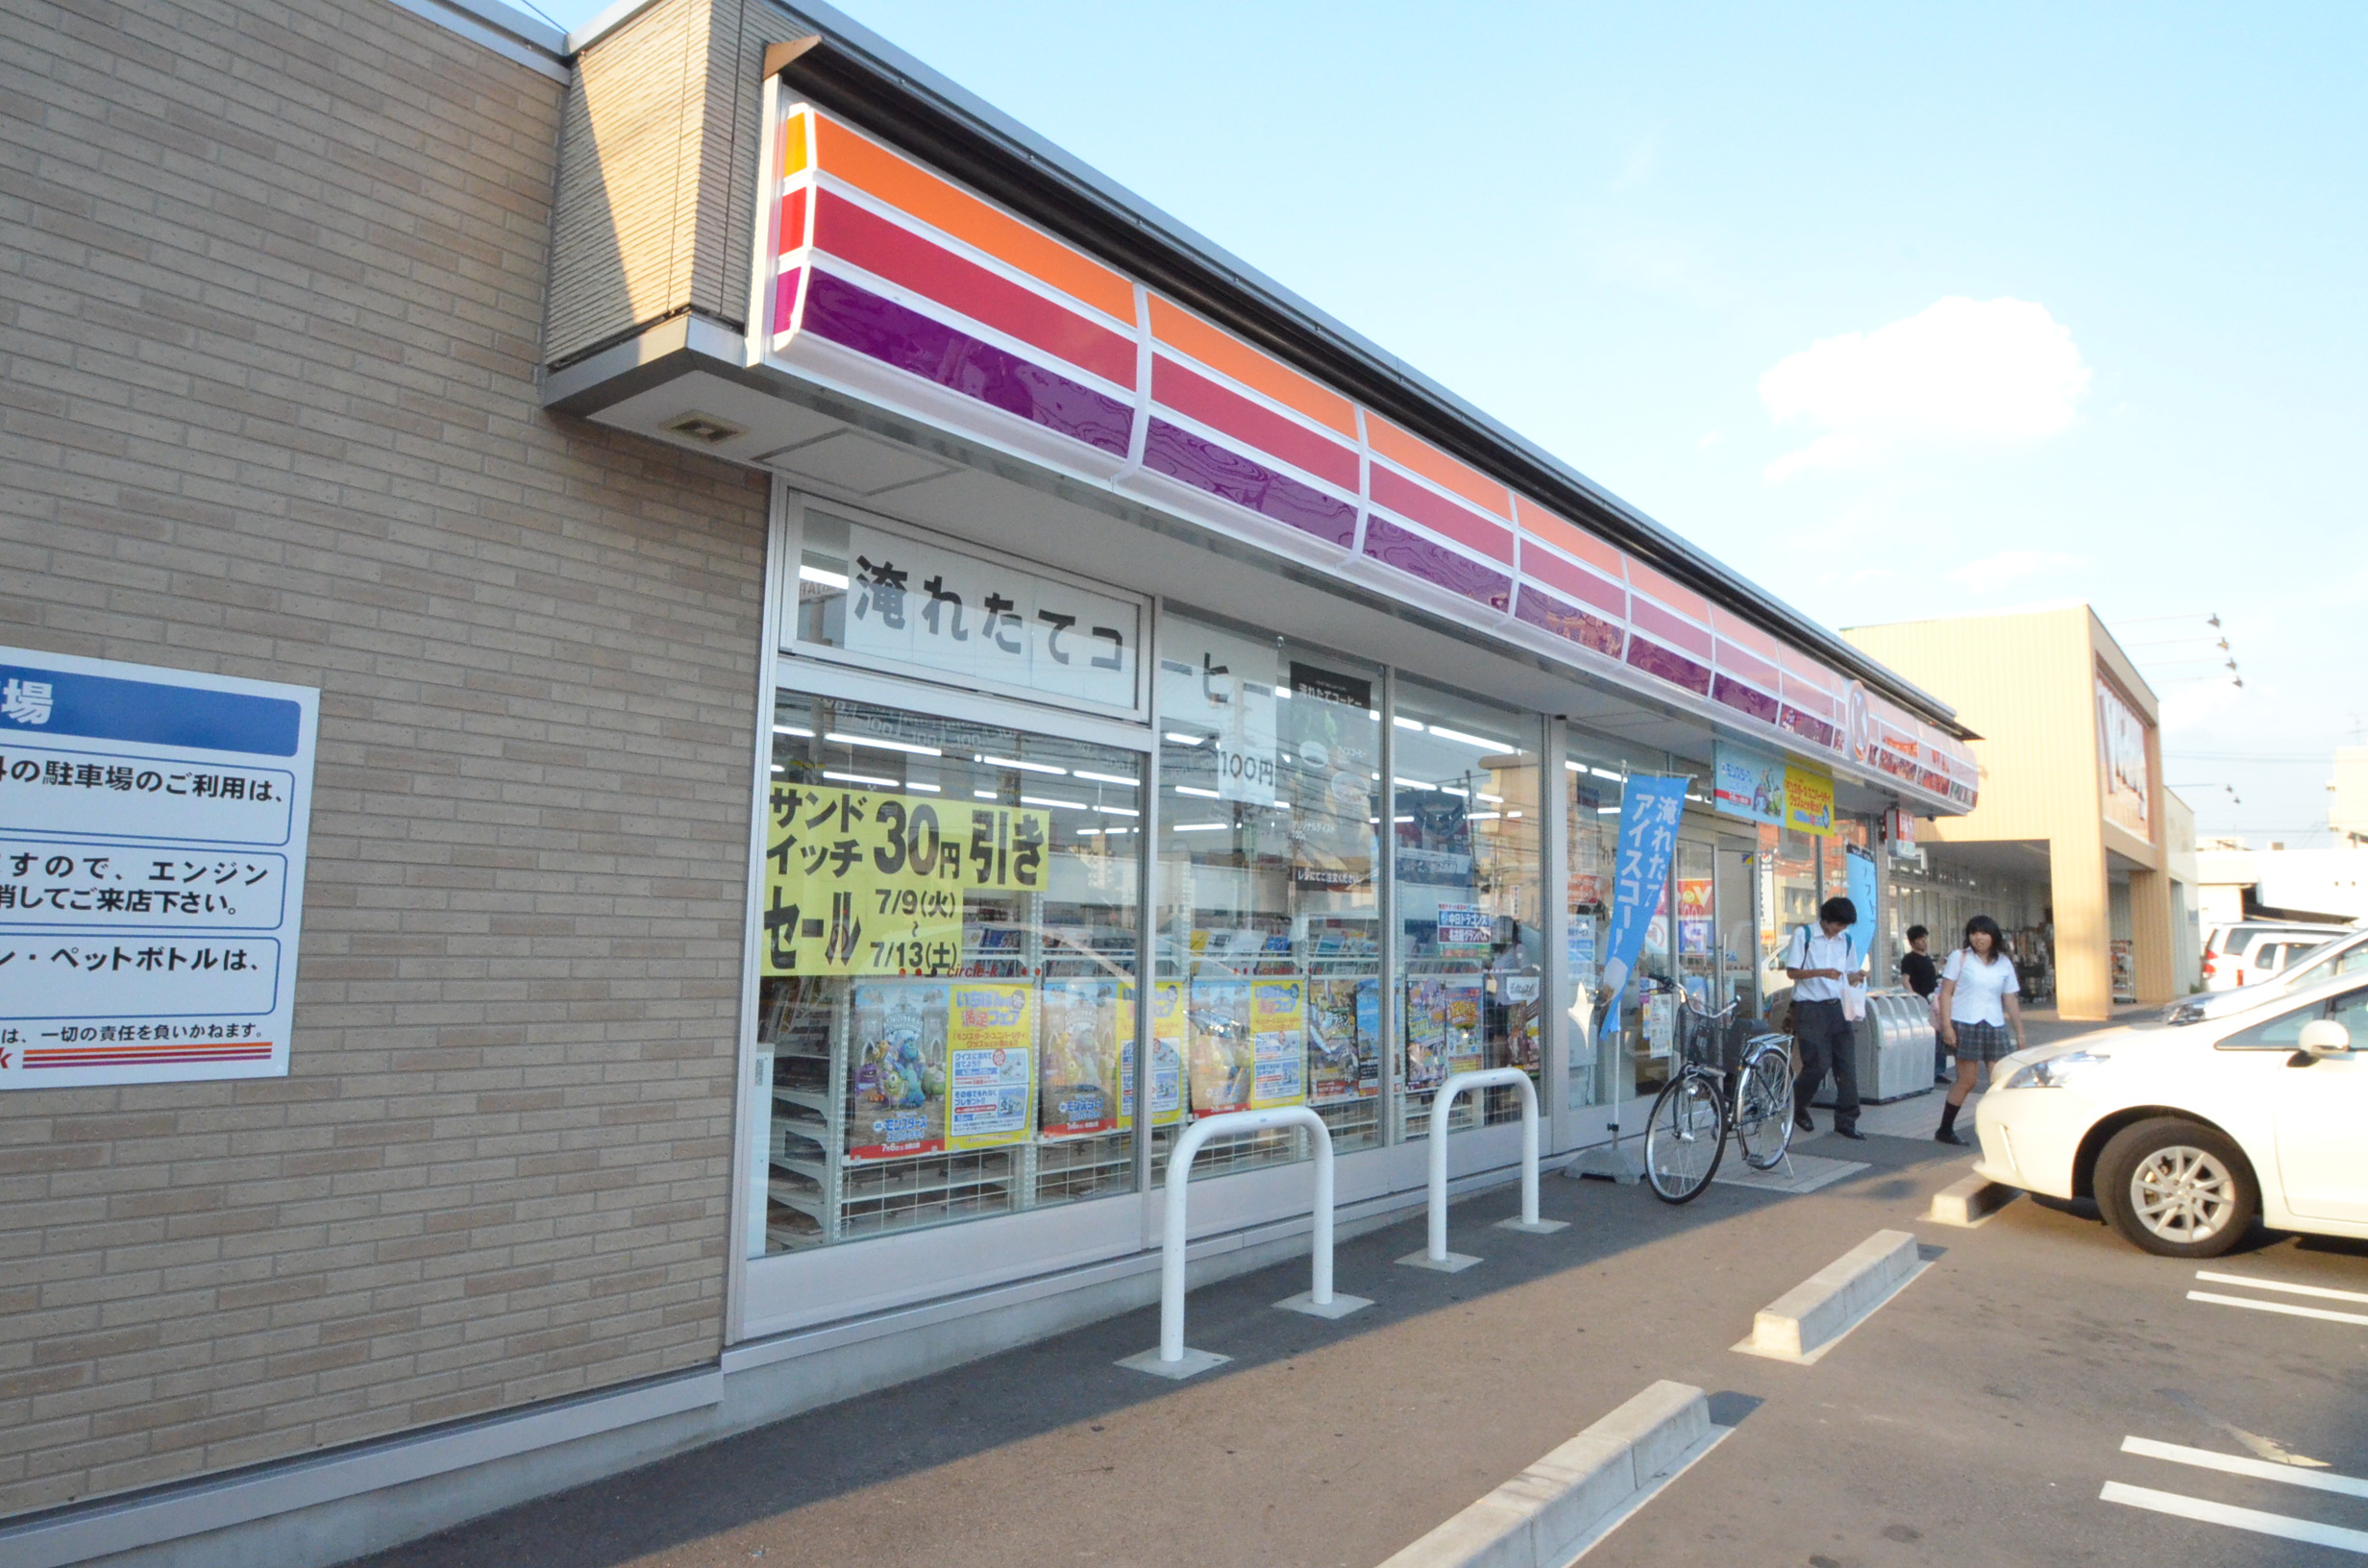 Convenience store. 193m to Circle K Shinmorinishi store (convenience store)